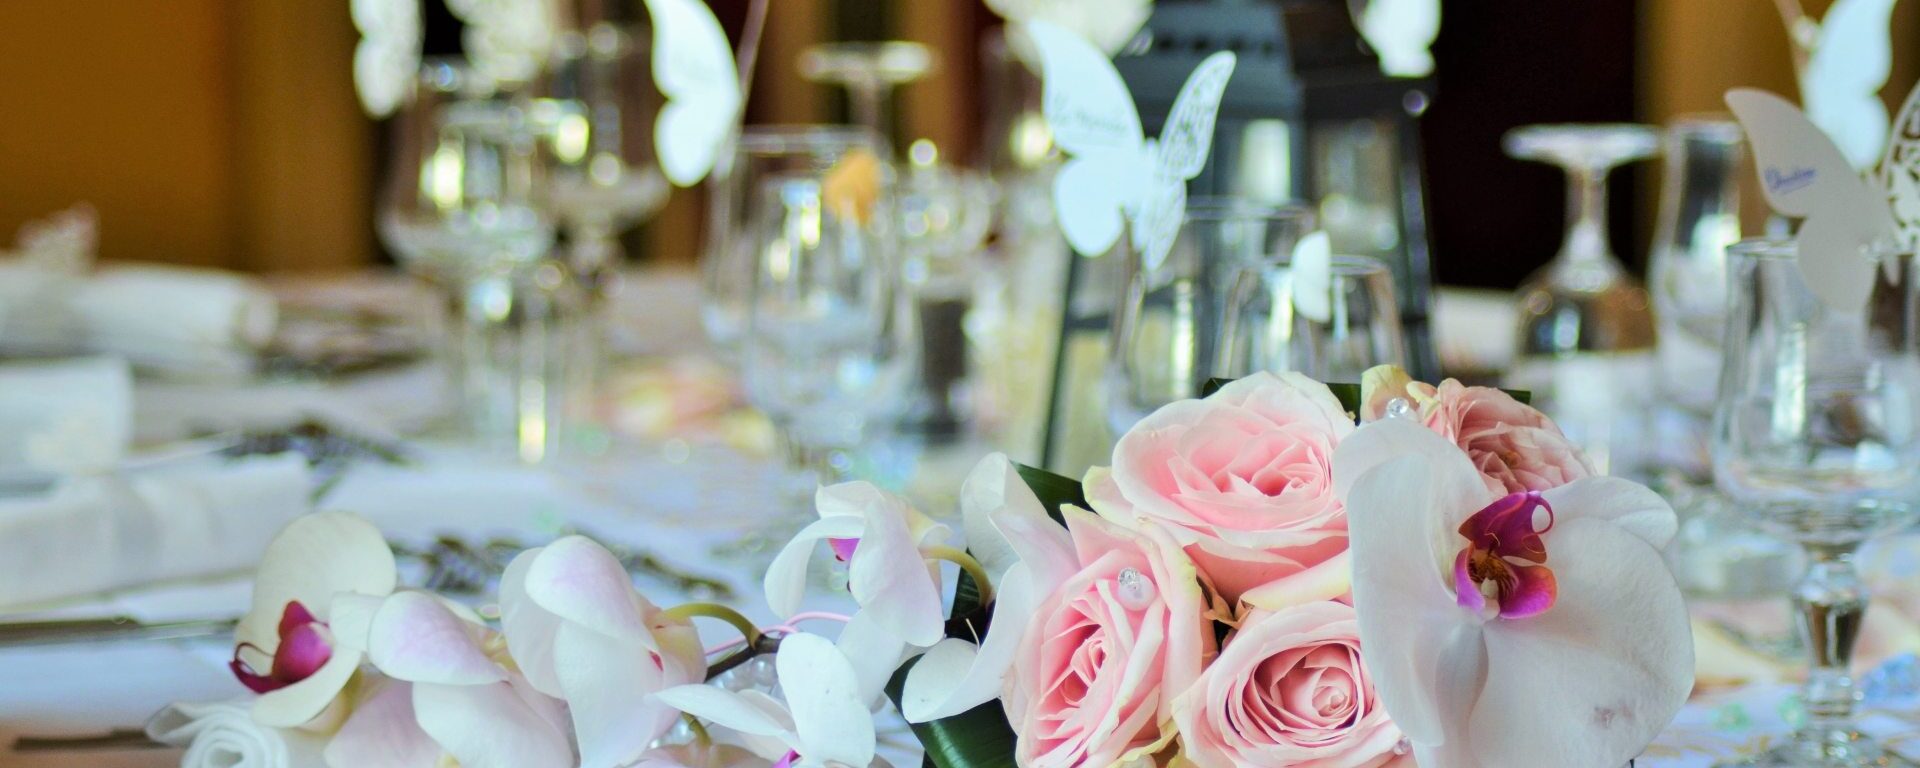 Table mariage pixabay